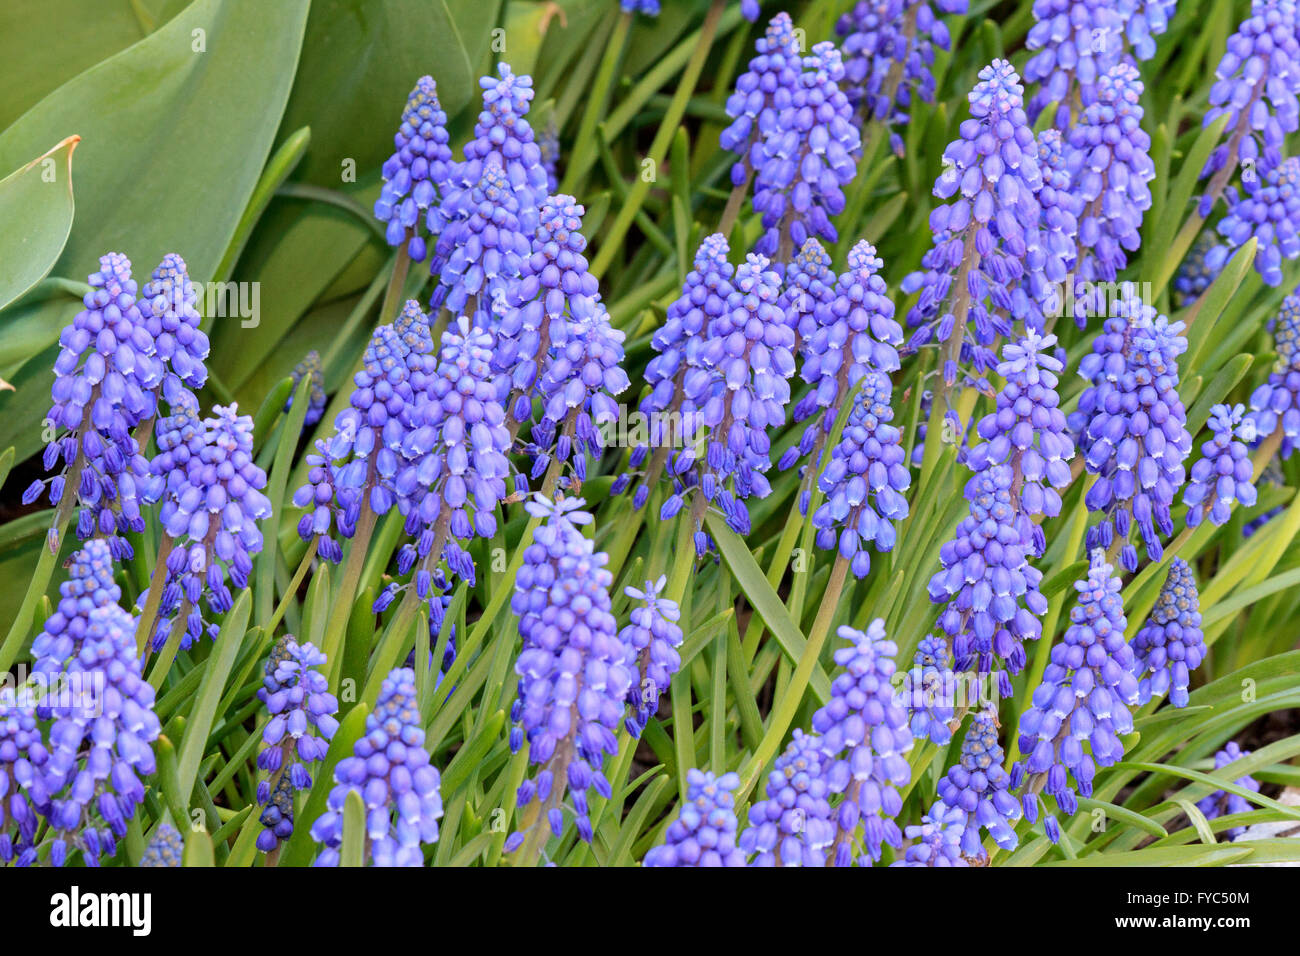 Grape hyacinth flowers. Stock Photo